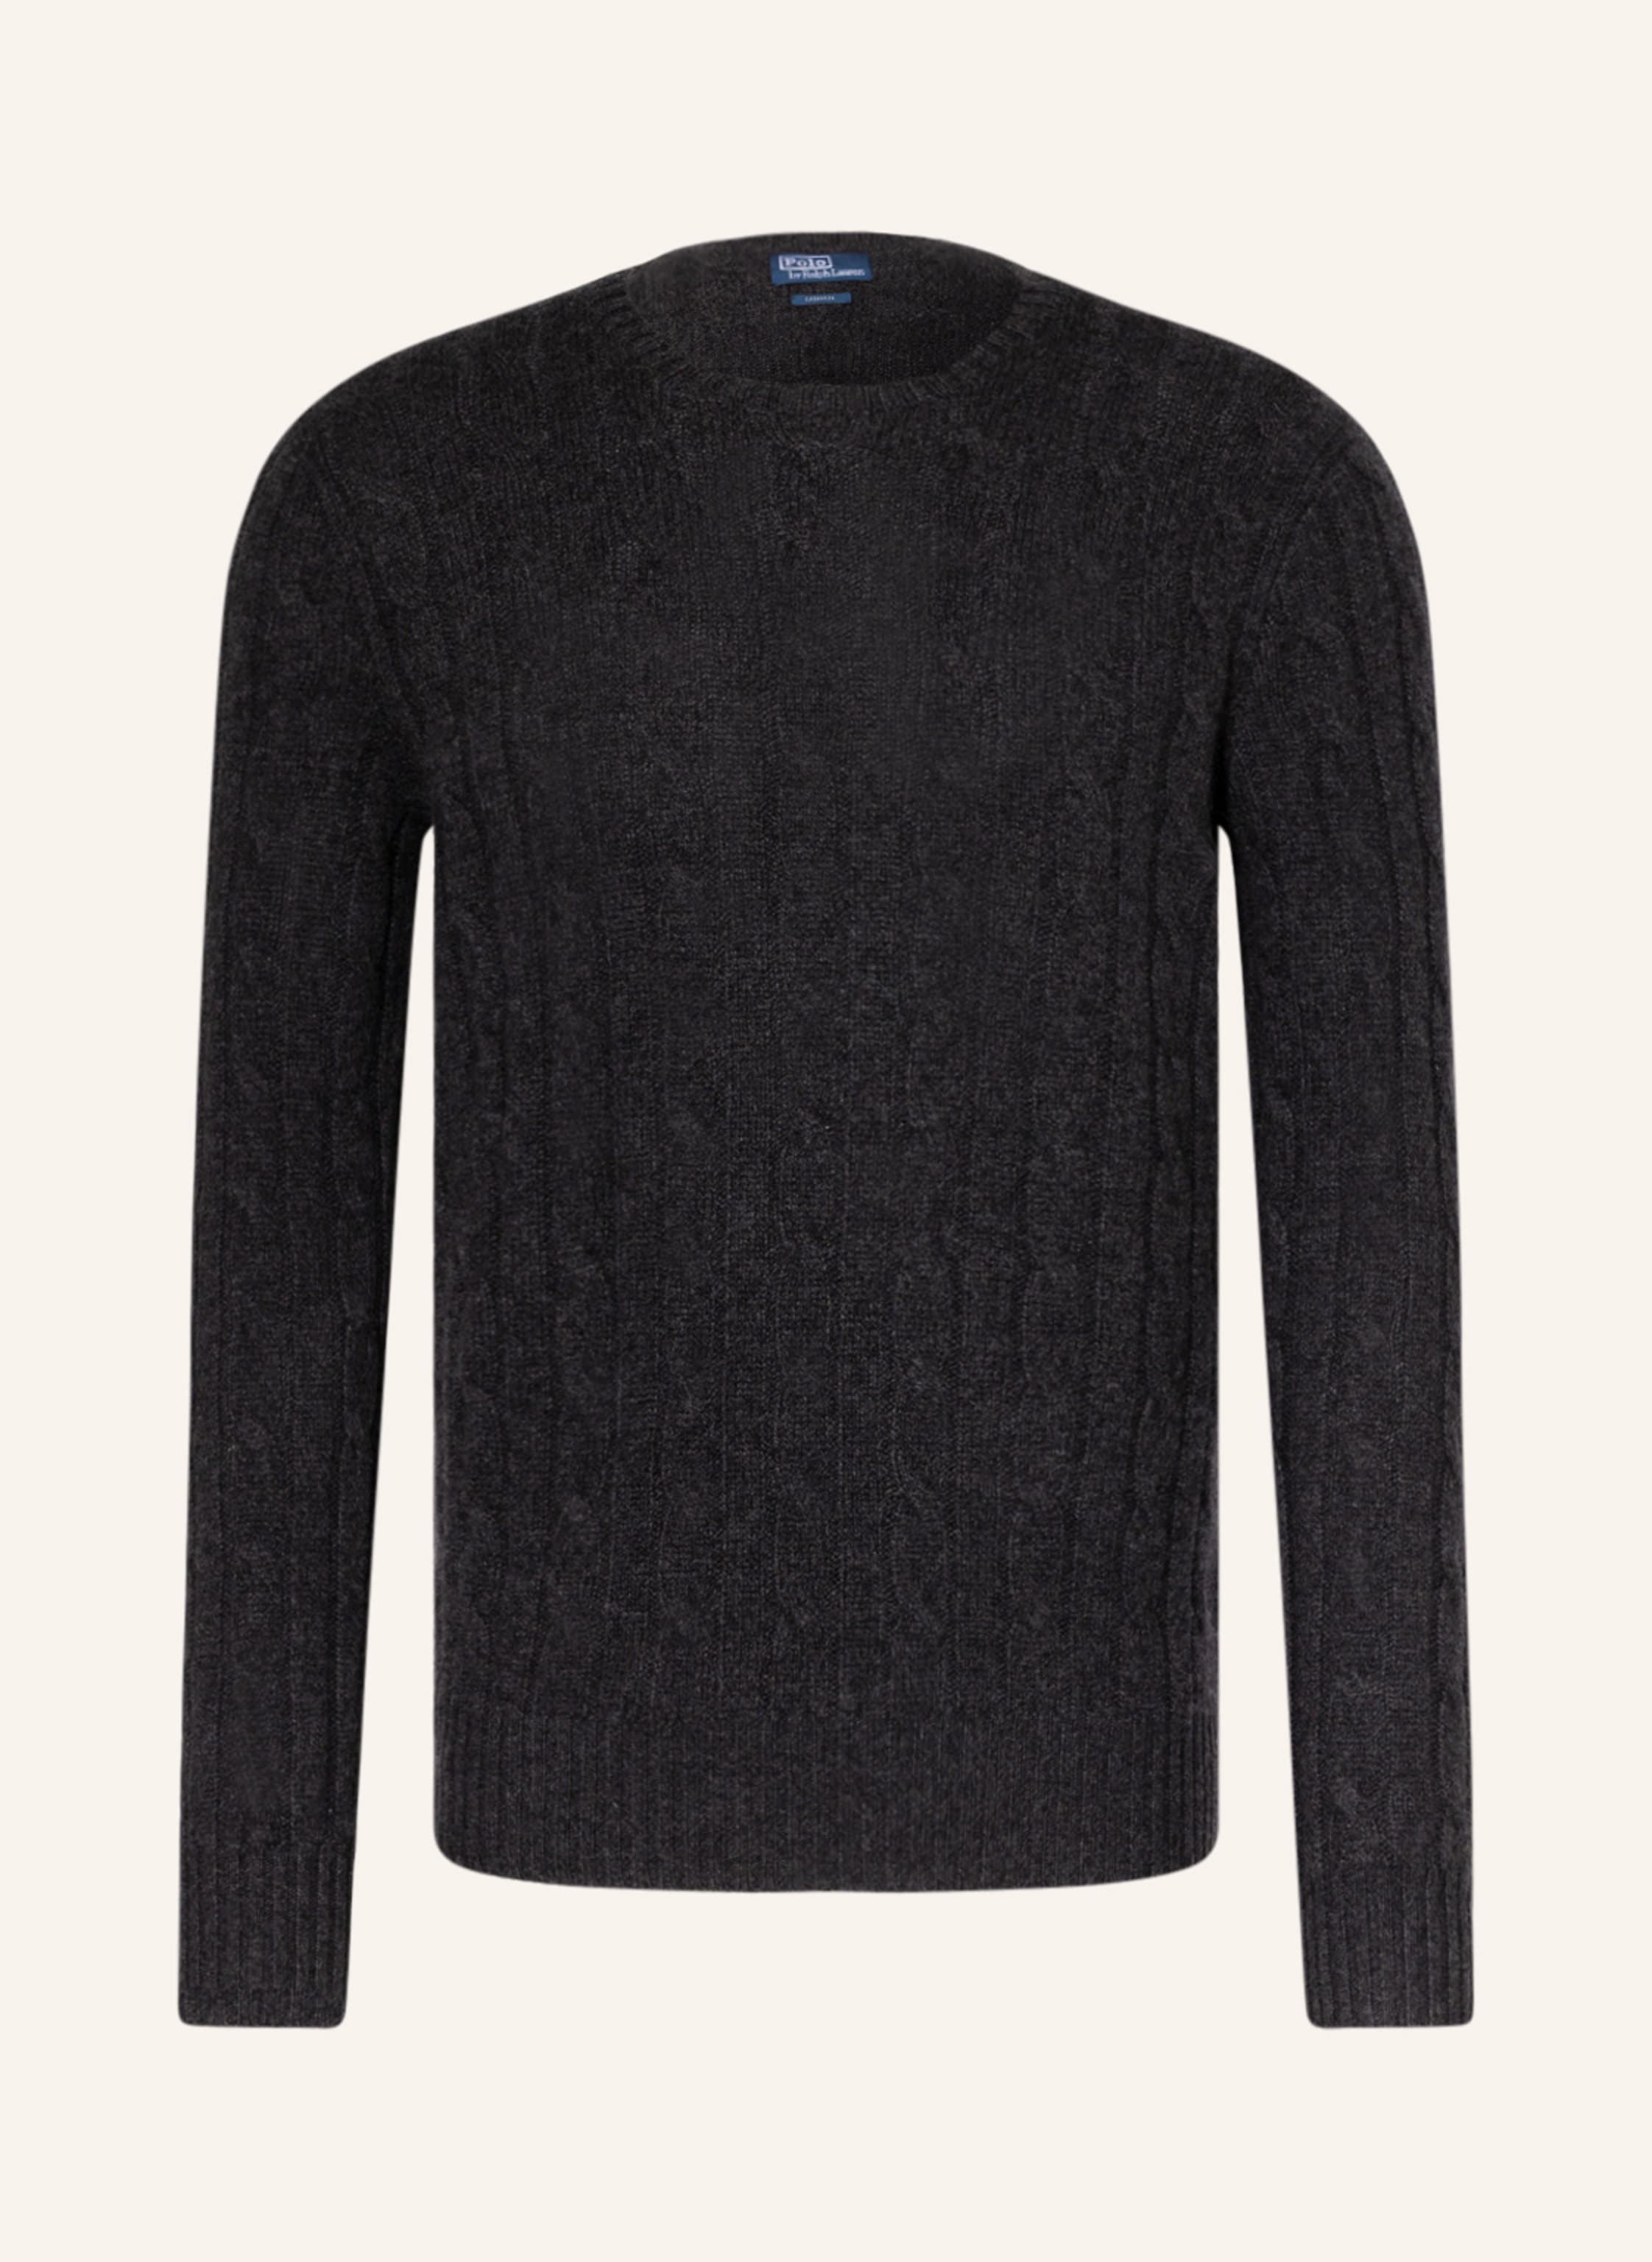 POLO RALPH LAUREN Cashmere sweater in dark gray | Breuninger